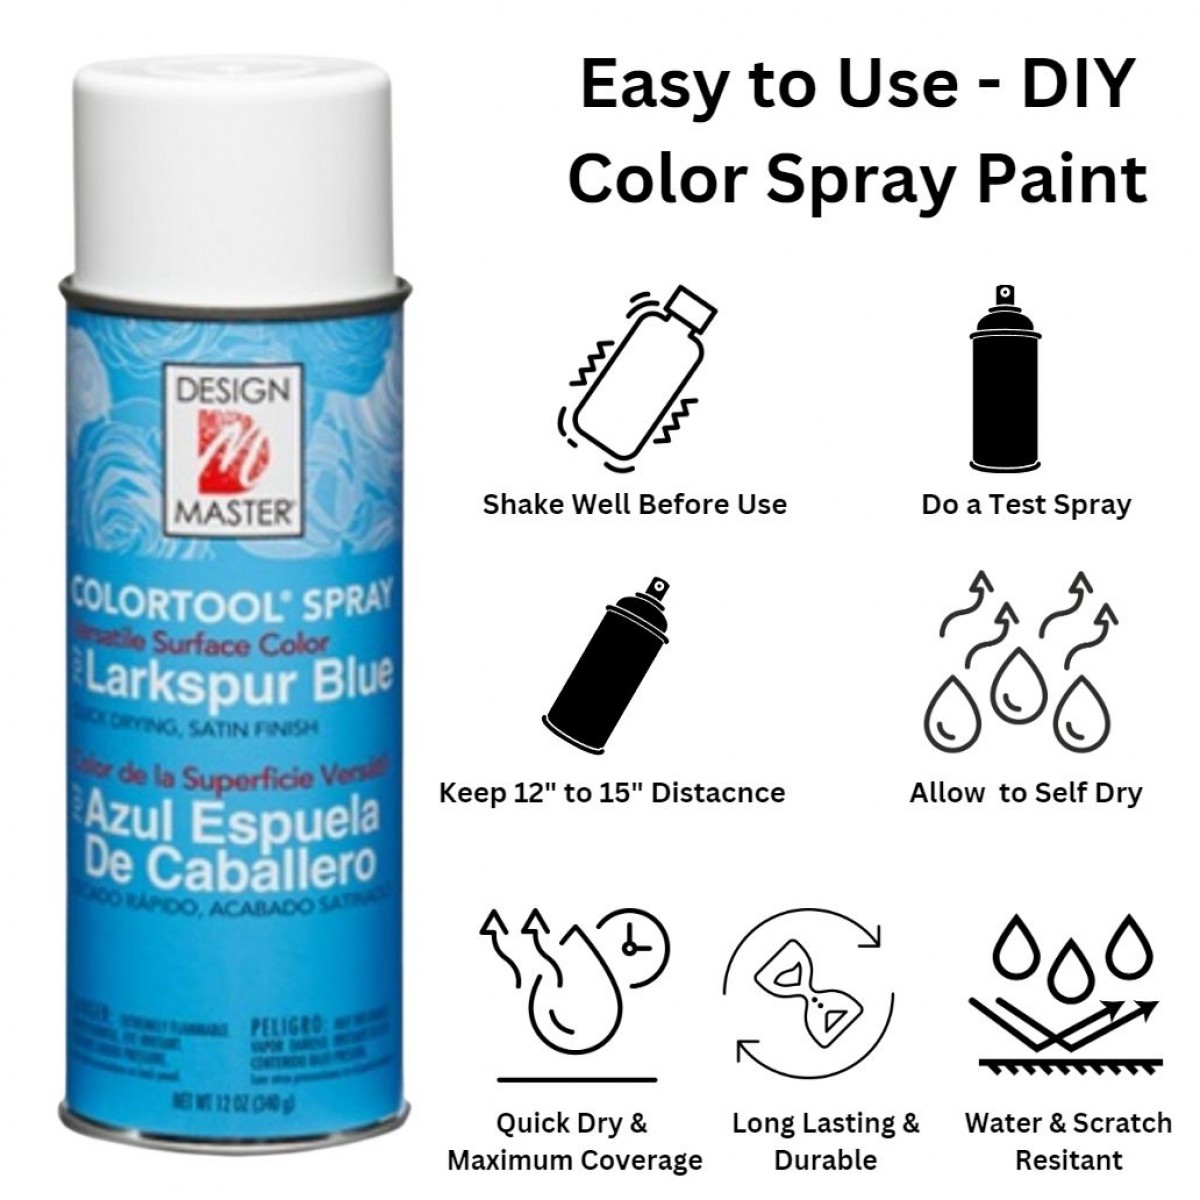 Design Master Color Tool Spray 